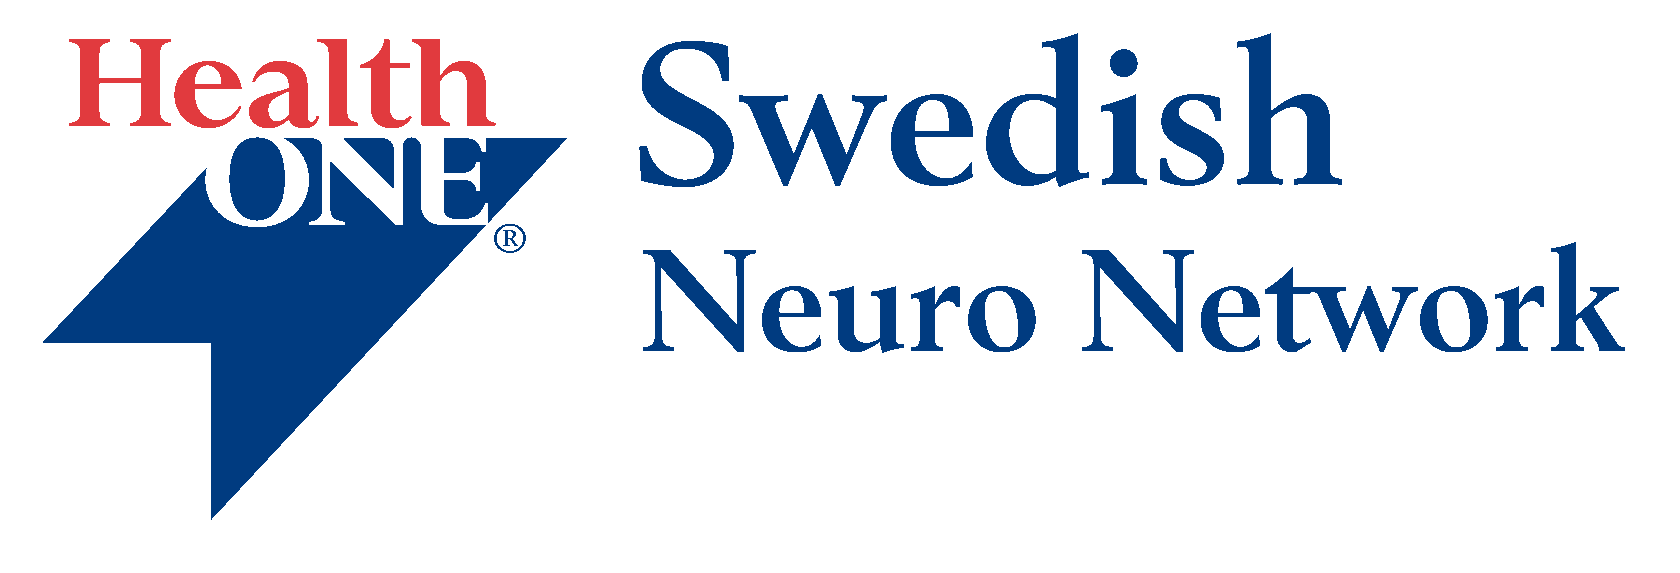 HealthONE Swedish Neuro Network.